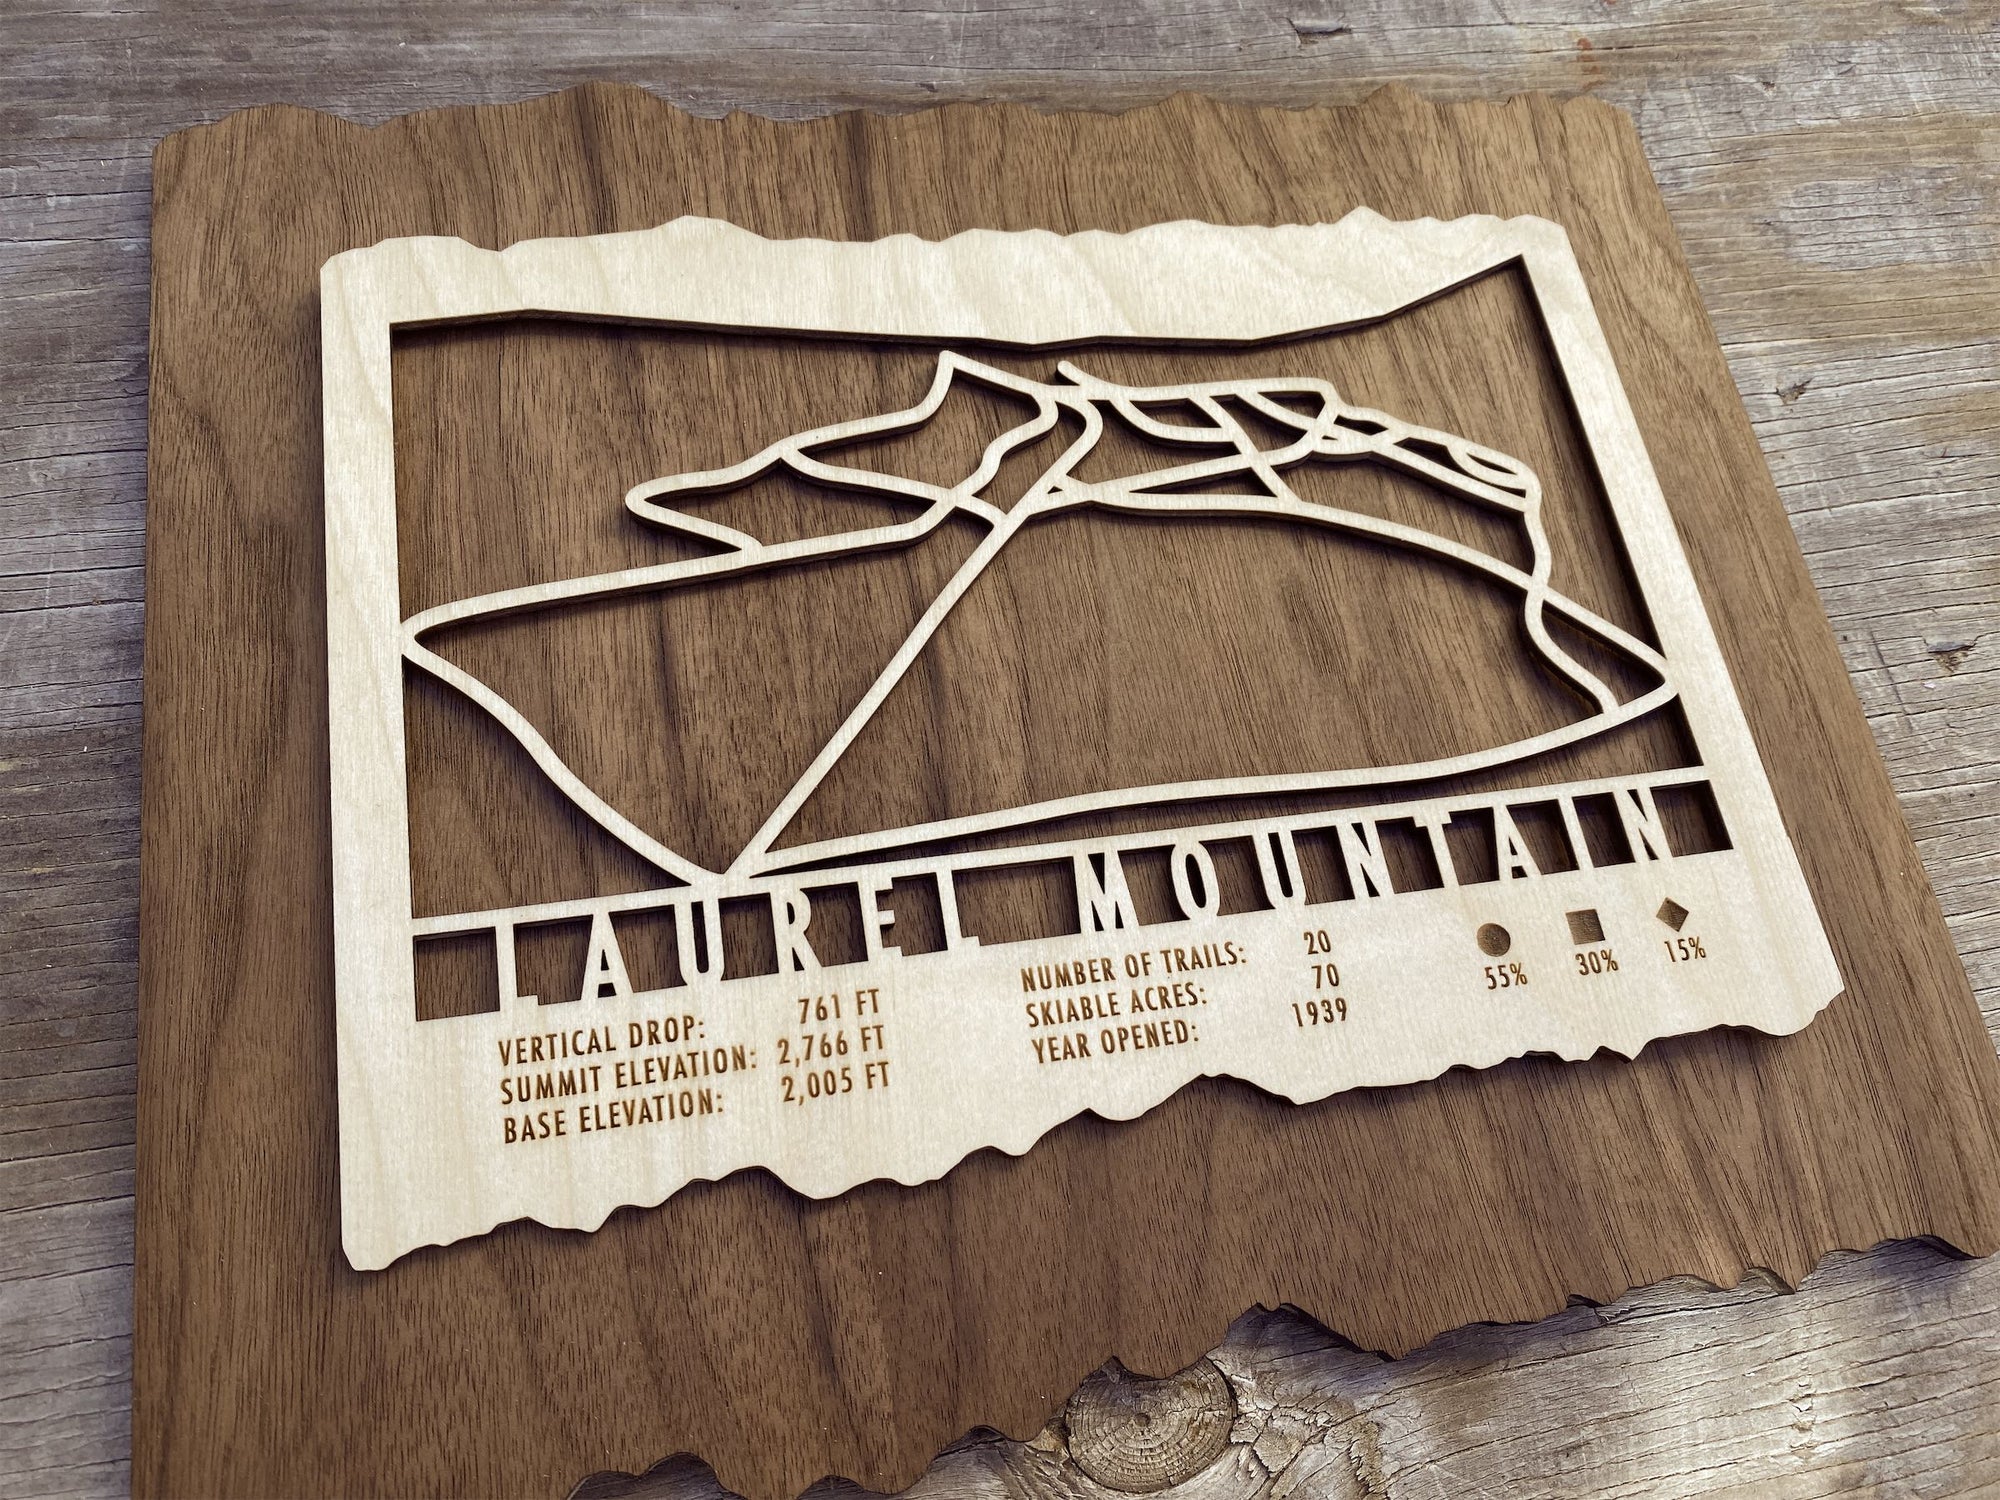 Laurel Mountain Ski Trail Map